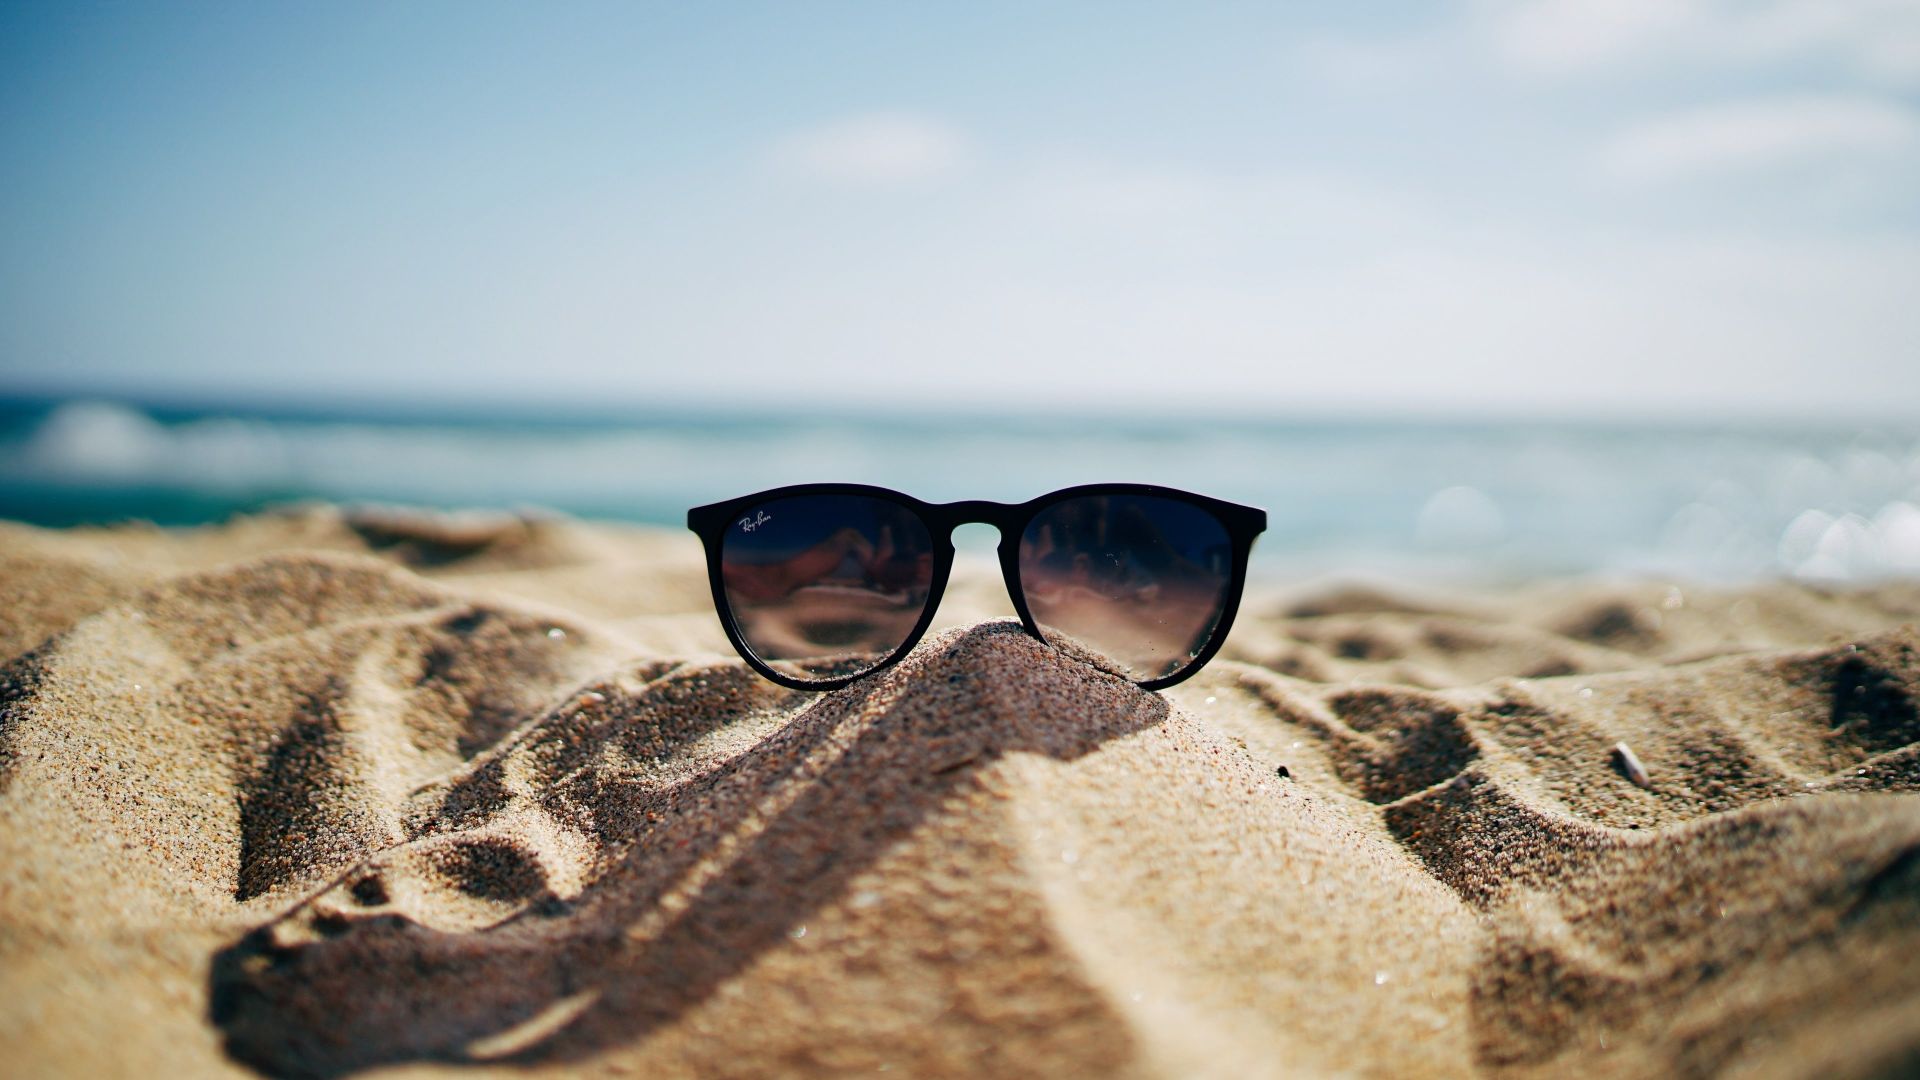 Wallpaper Ray ban sunglasses on hot sand beach